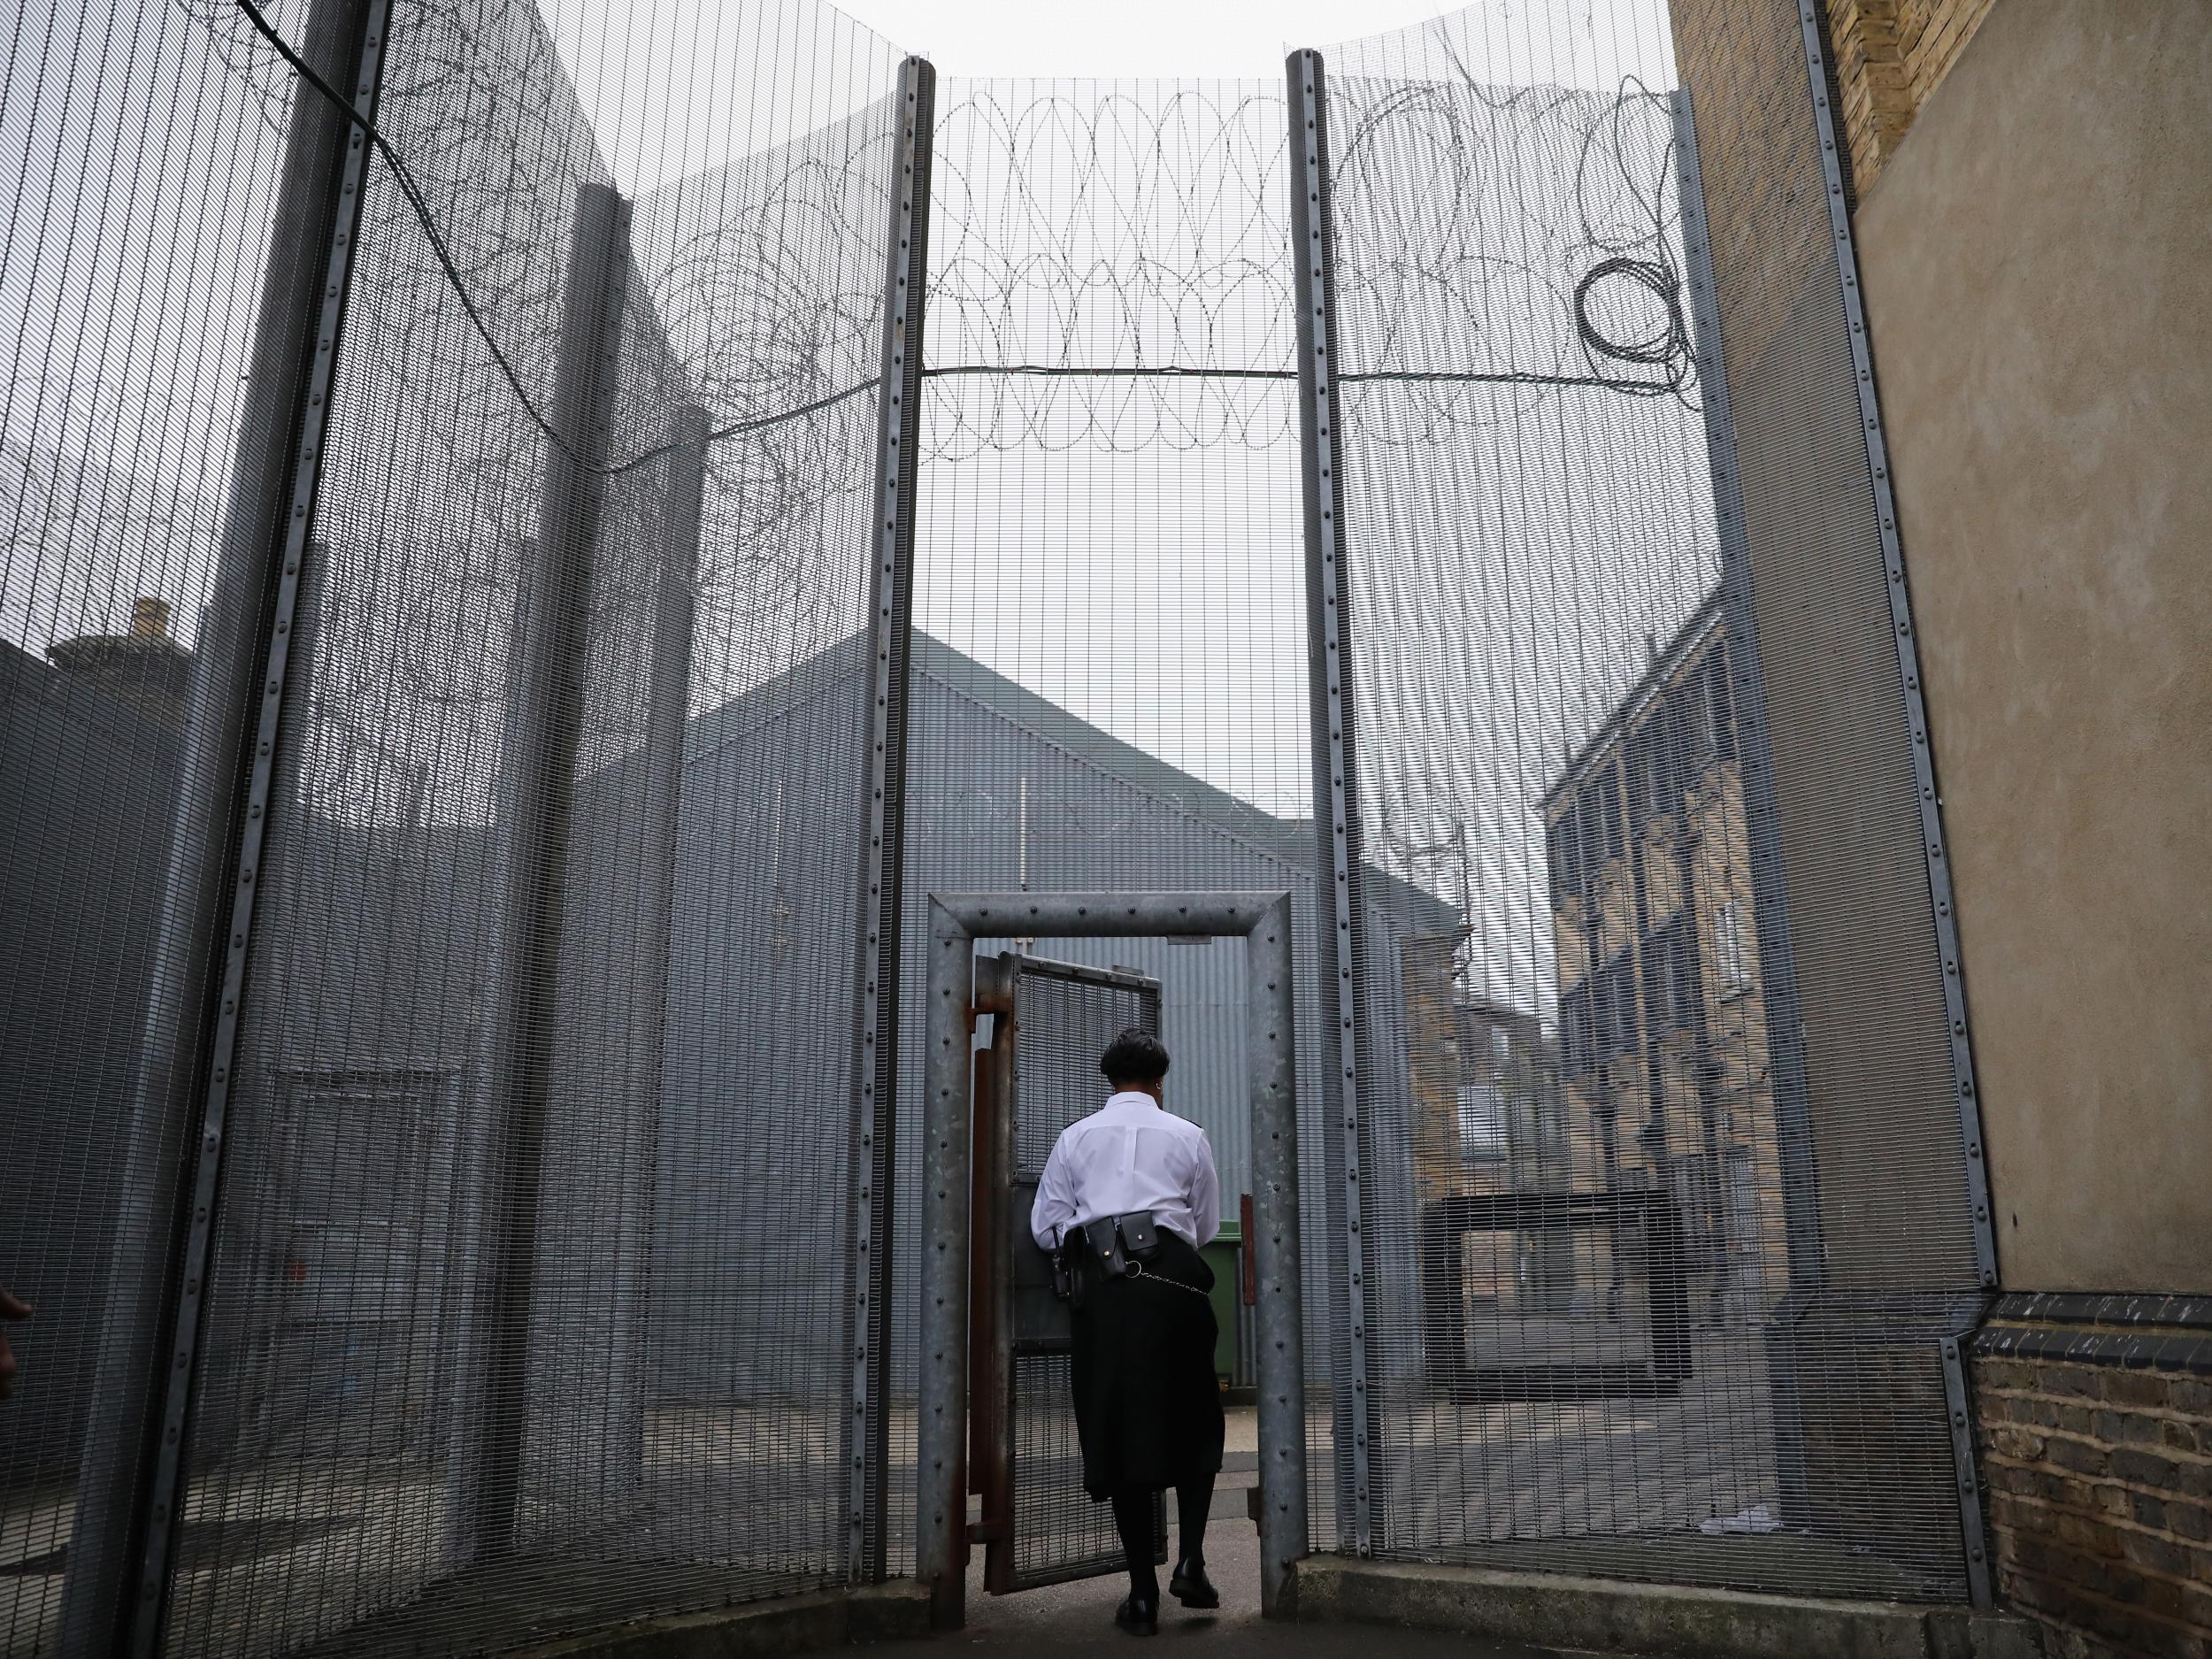 It is easier to get drugs in Brixton prison than clean underwear